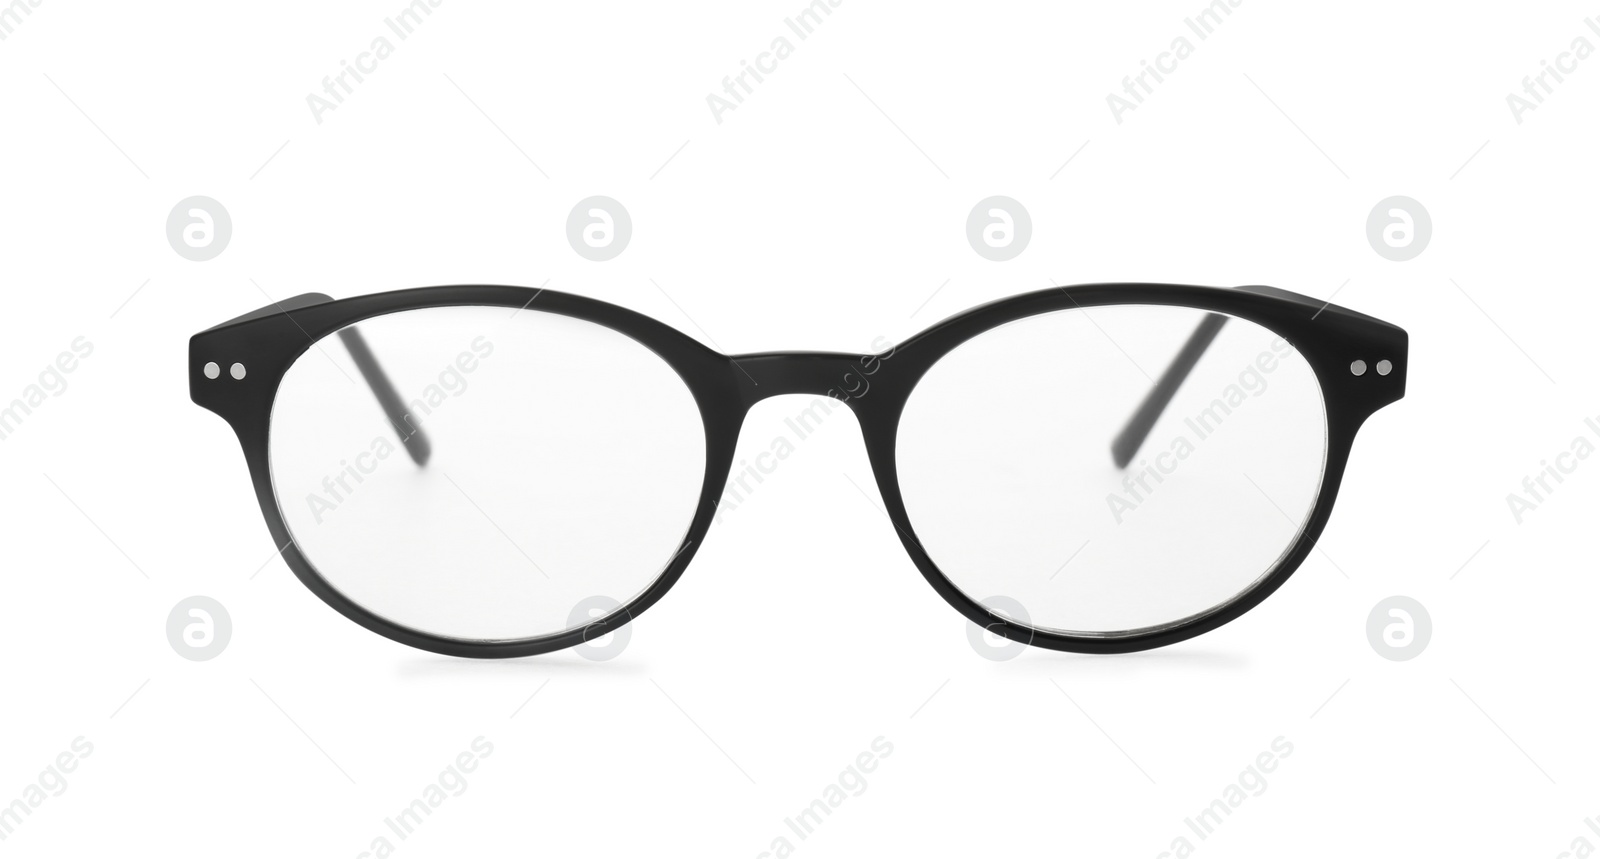 Photo of New modern elegant glasses isolated on white